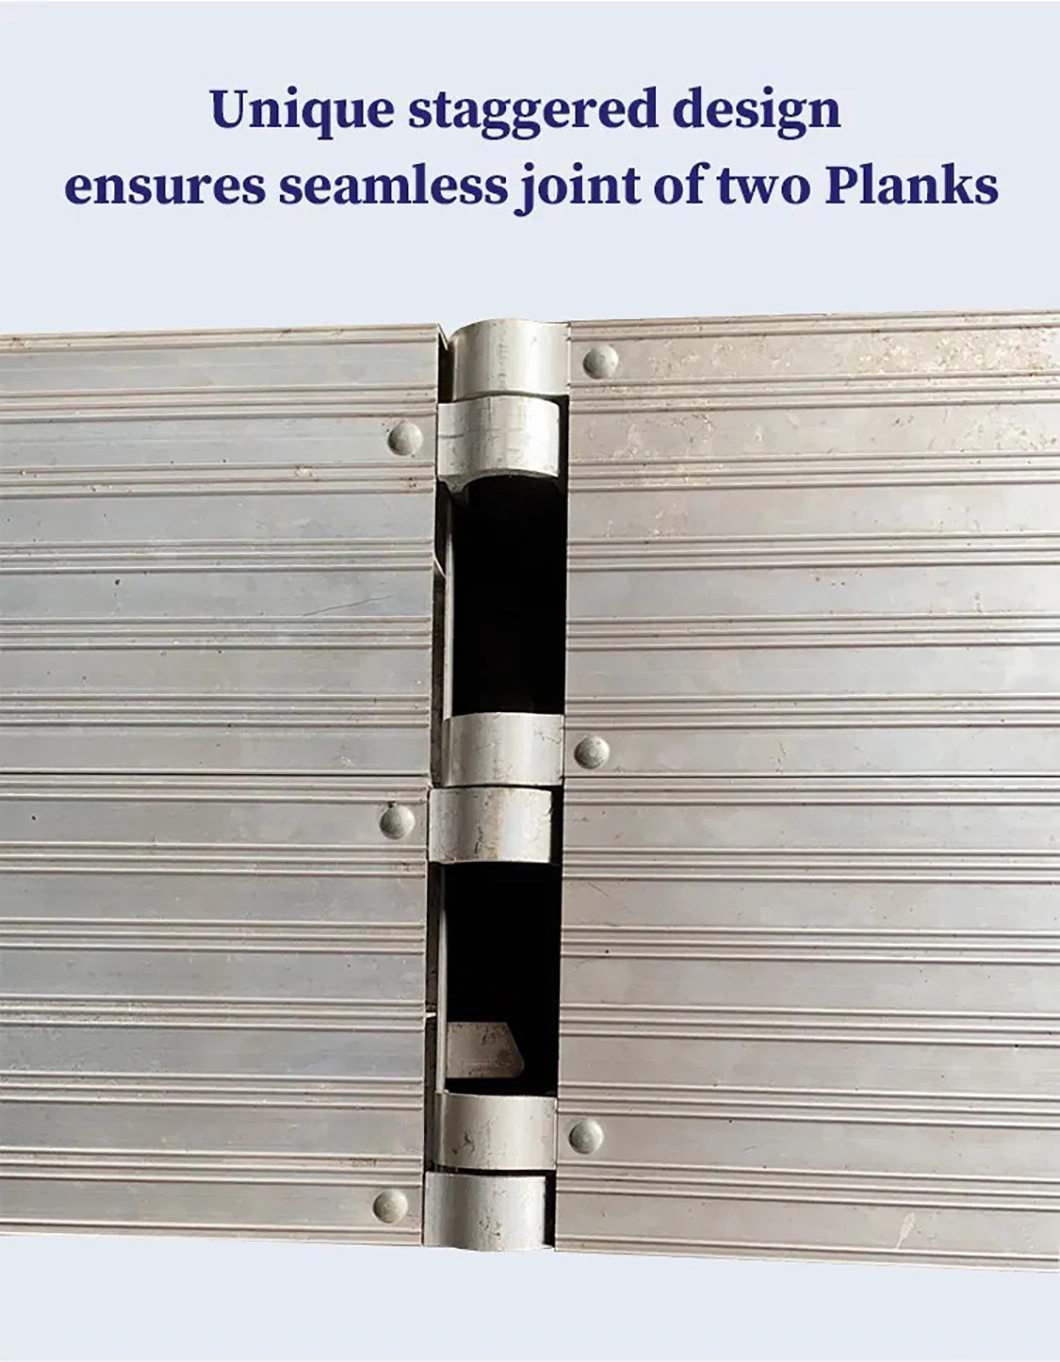 North America Standard 7′ L Aluminum Walkboard Aluminum Plank for Frame Scaffold